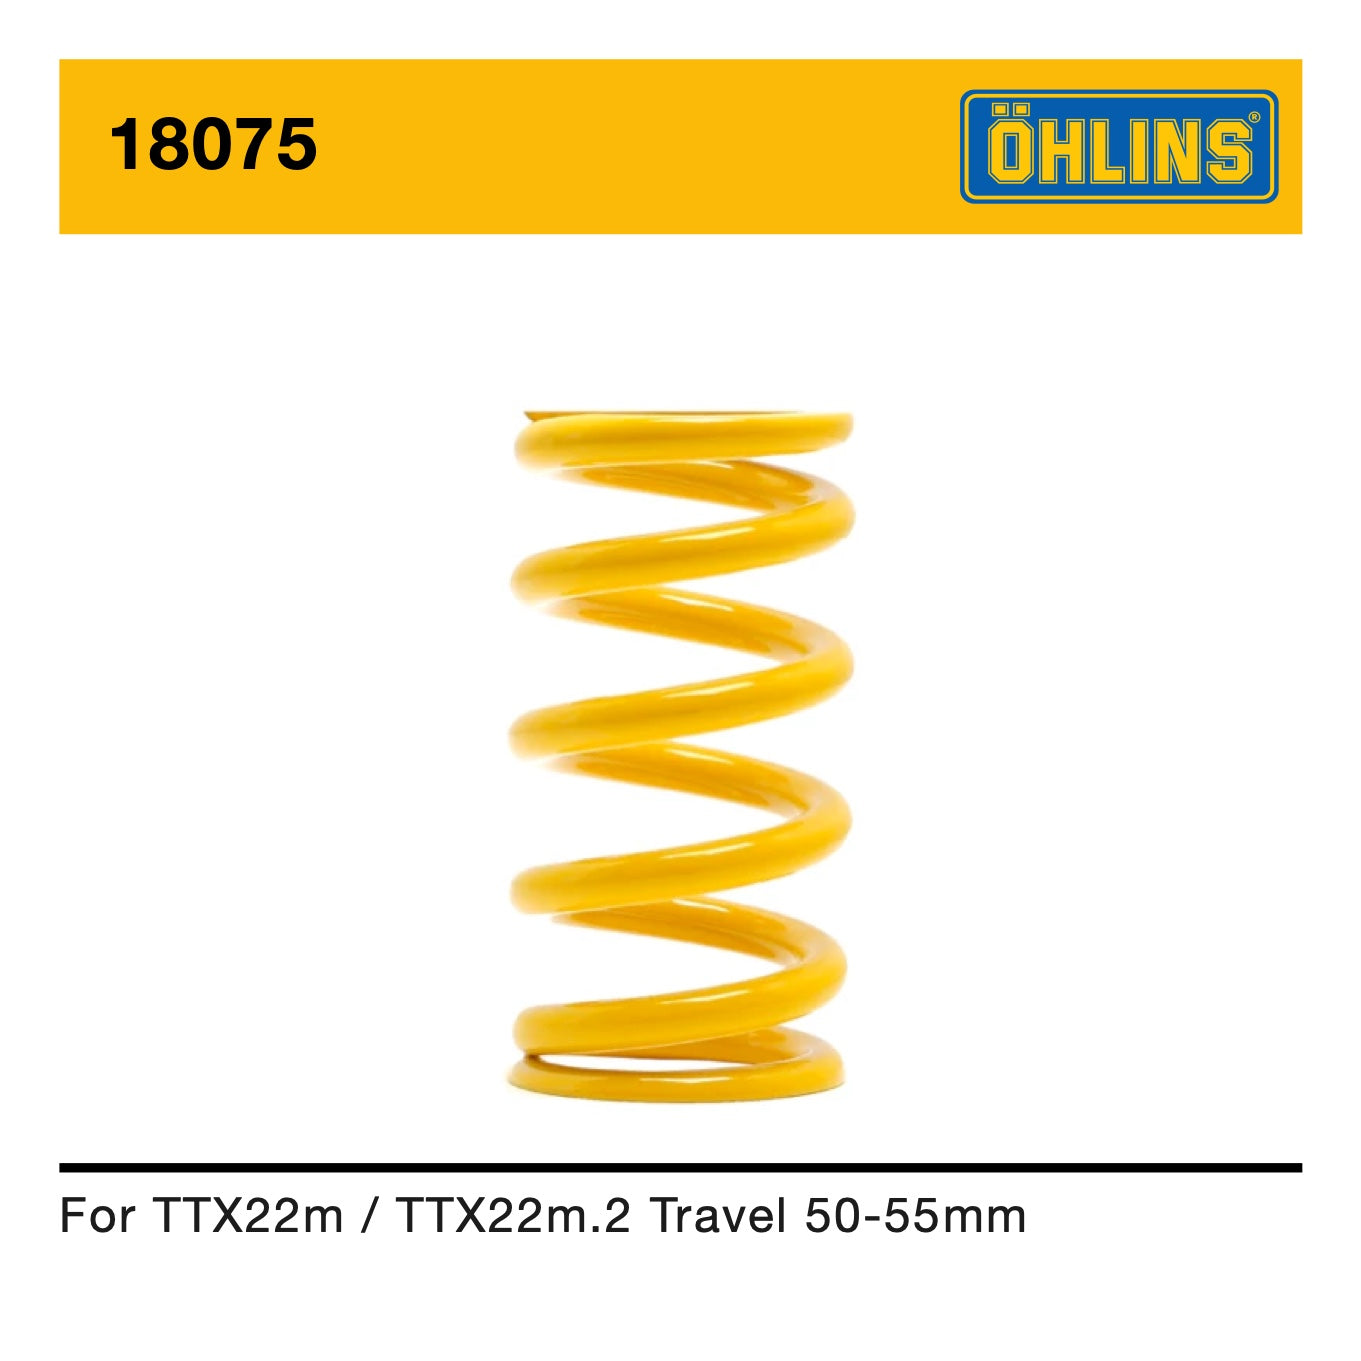 Öhlins spring serie 18075 for 55, 52.5, 50mm travel